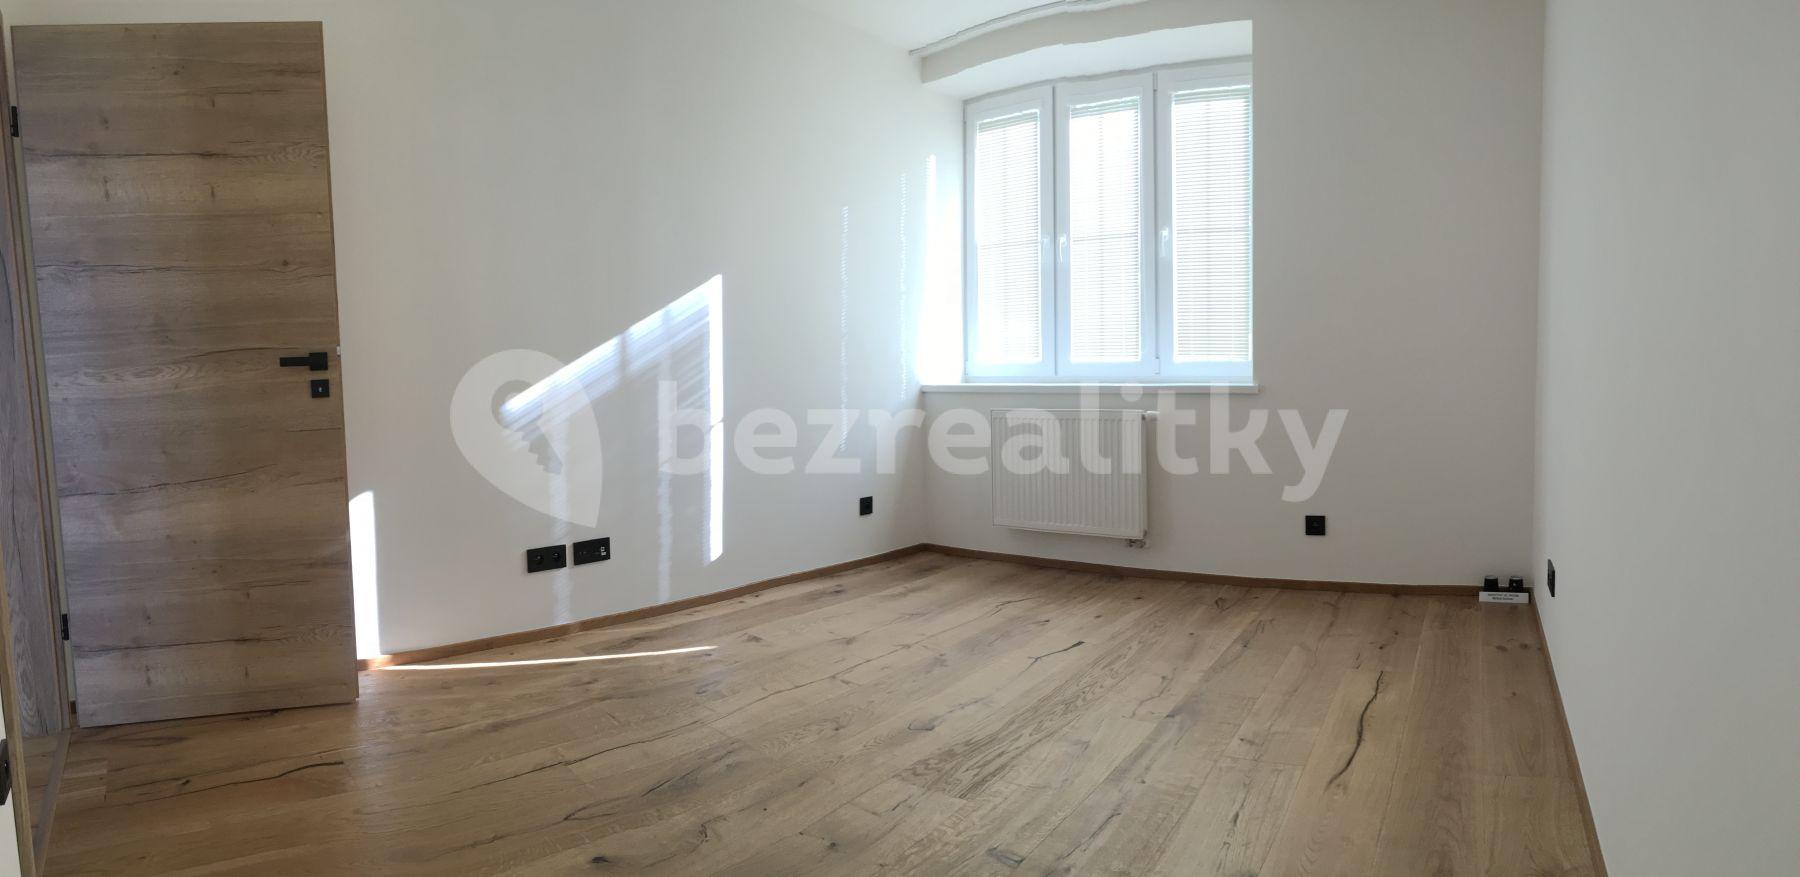 2 bedroom with open-plan kitchen flat to rent, 79 m², Sulická, Prague, Prague